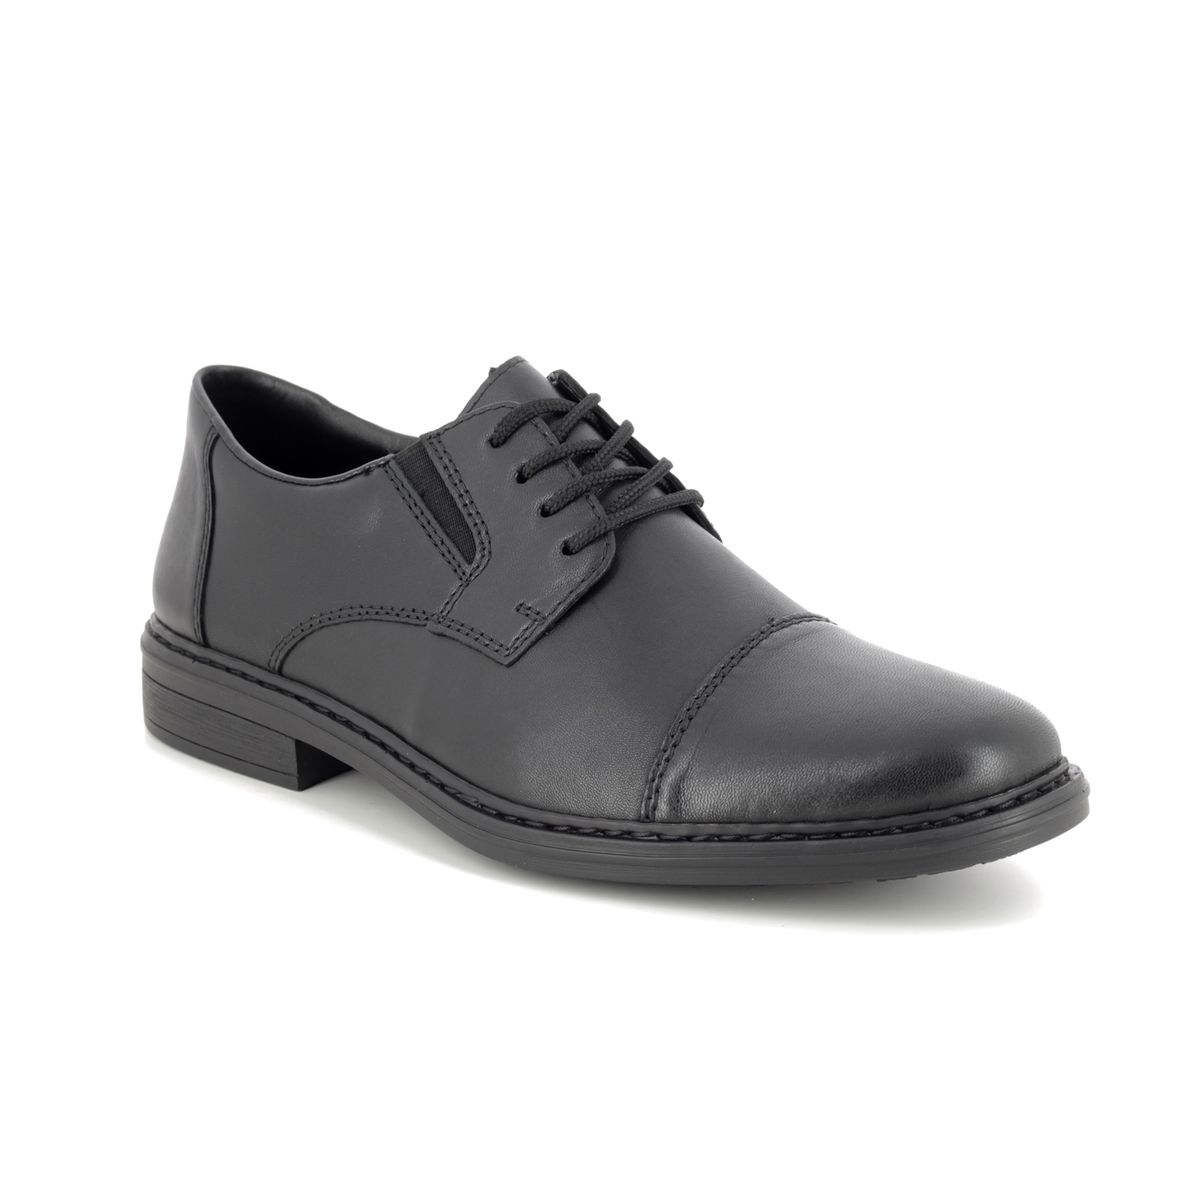 clerk shoes